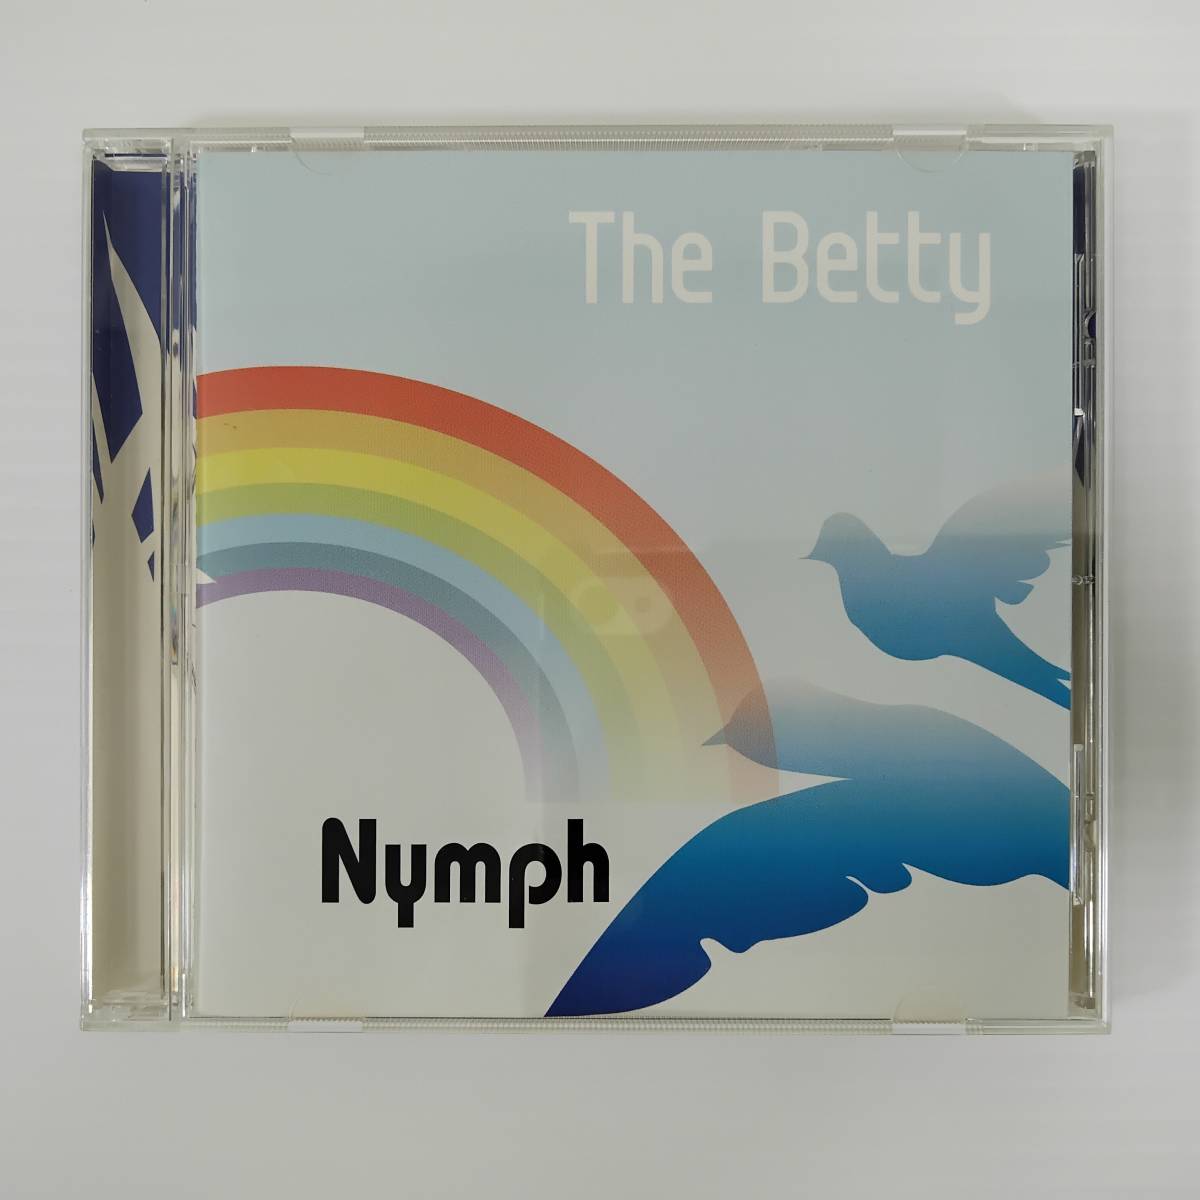 レア !! 自主制作アルバム CD The Betty Nymph 声優 新田恵海 5曲収録